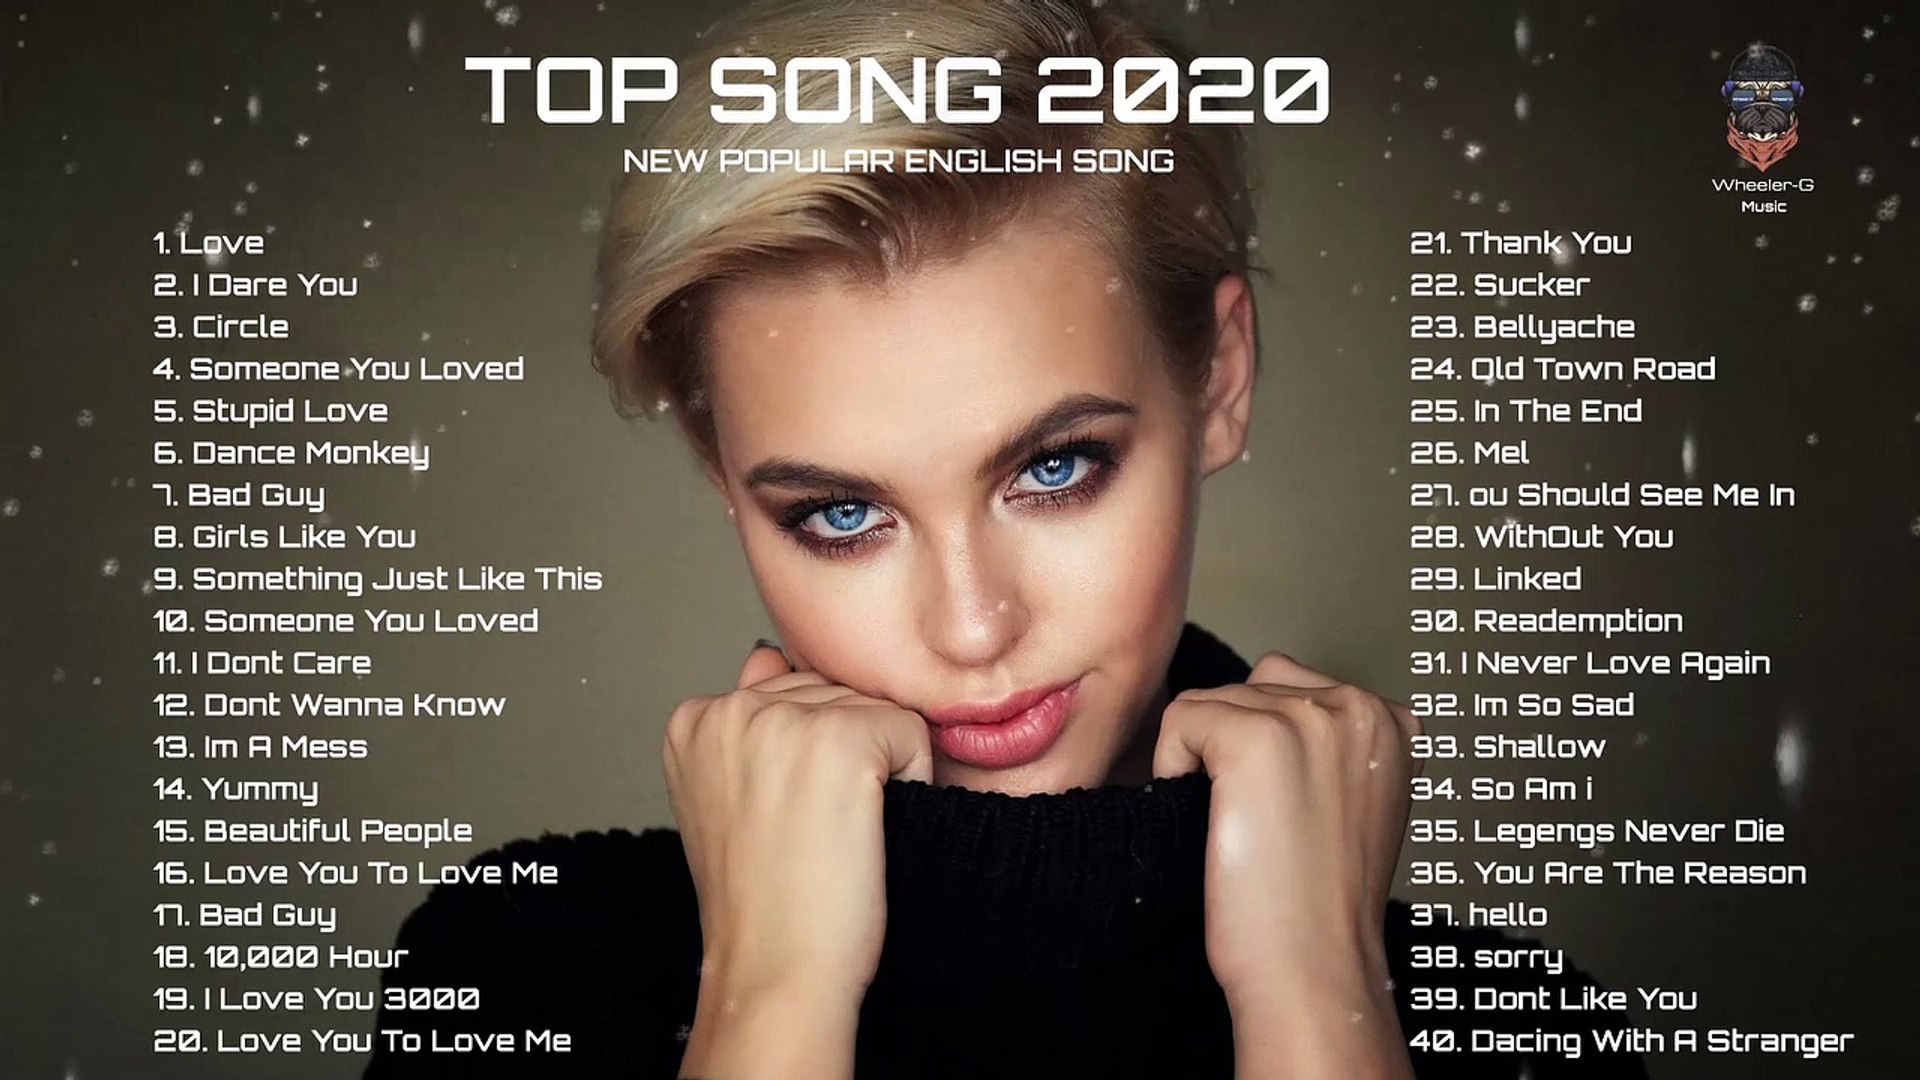 Music Top 50 Song - Music Billboard - Music Top Songs 202 0 - [Wheeler-G] -  video Dailymotion